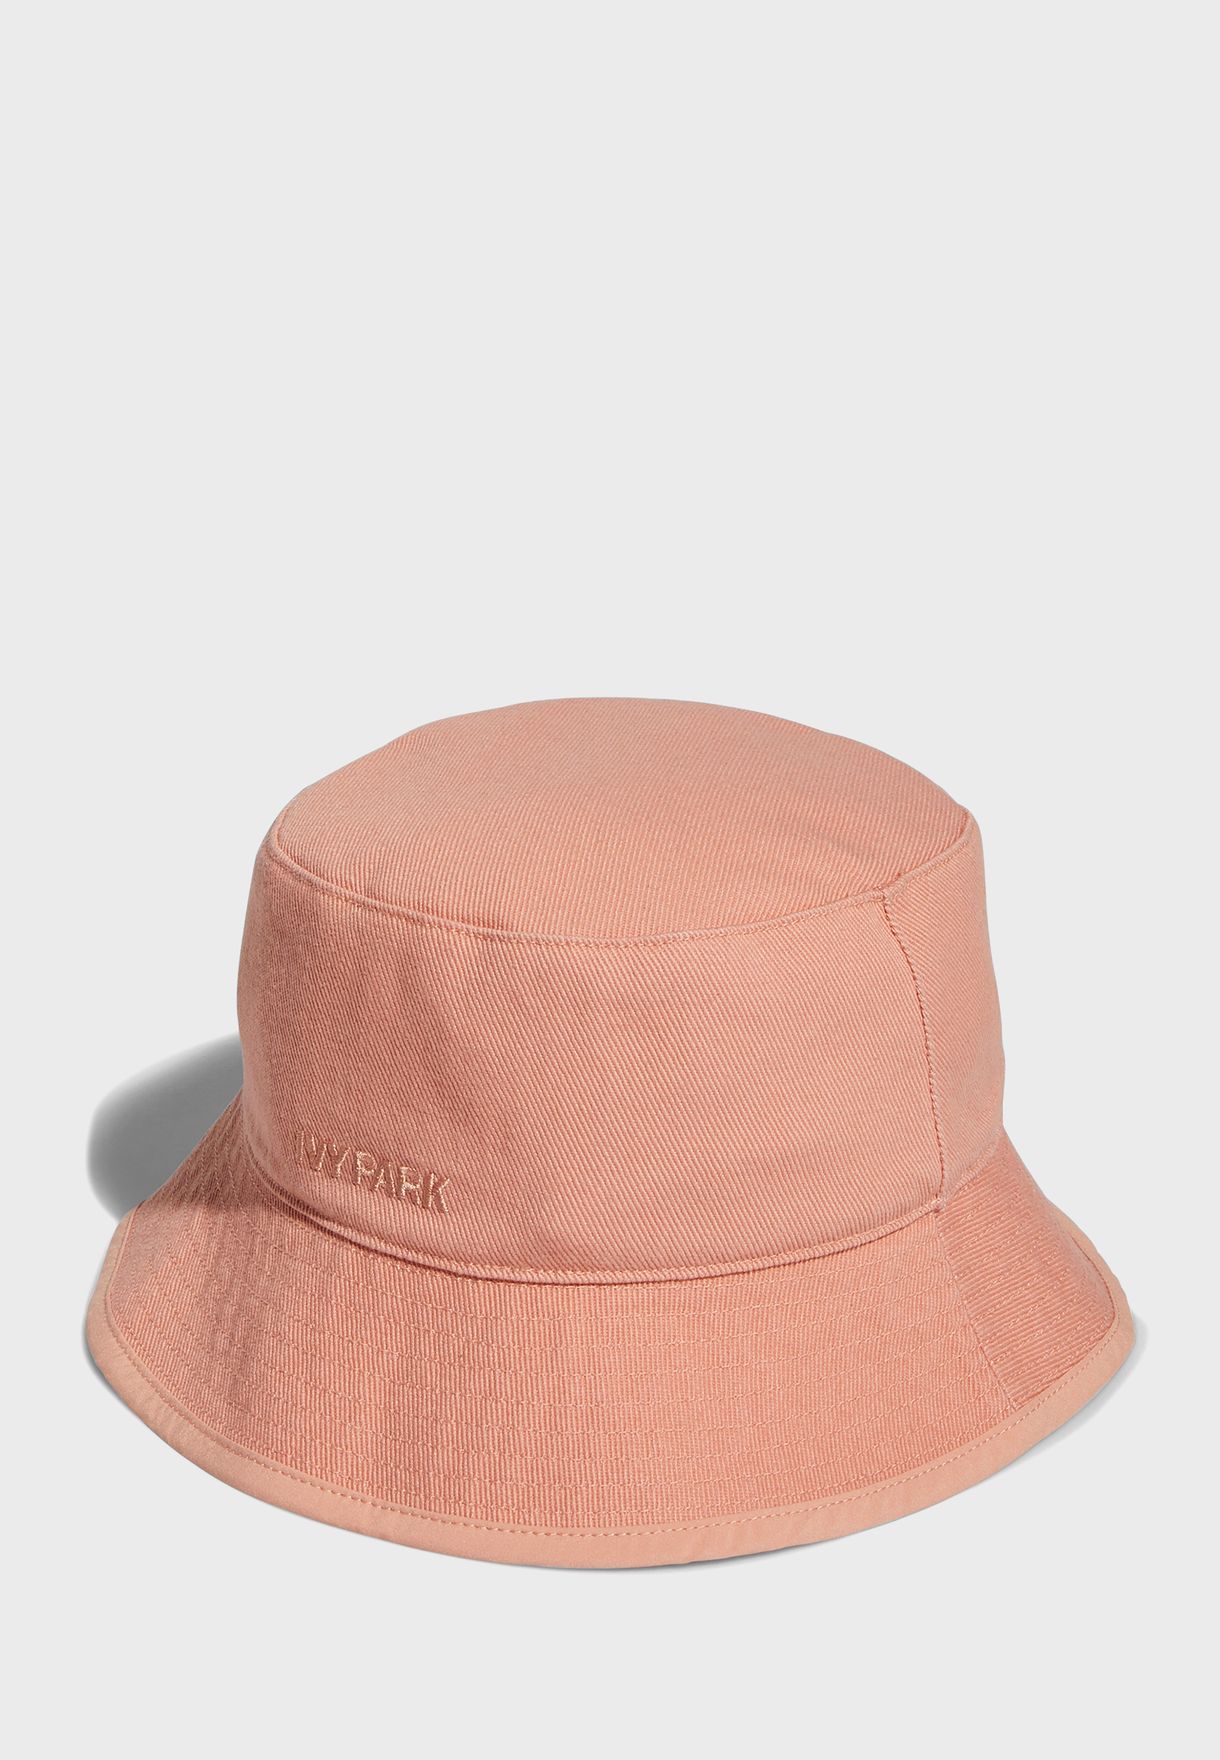 Ivy Park Reversible Bucket Hat